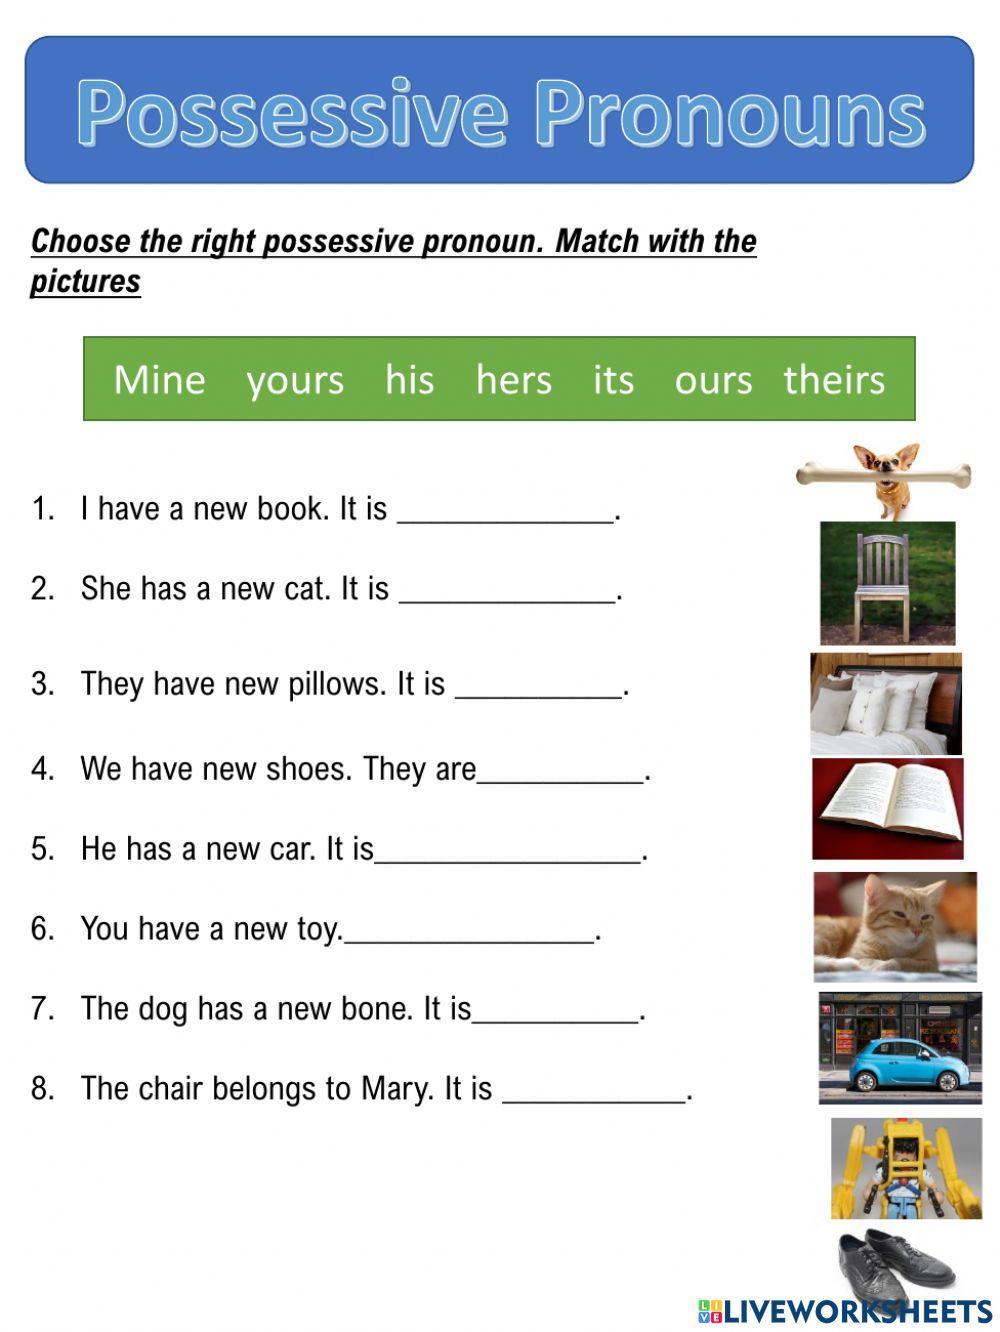 Possessive pronouns online exercise for grade 2 | Live Worksheets